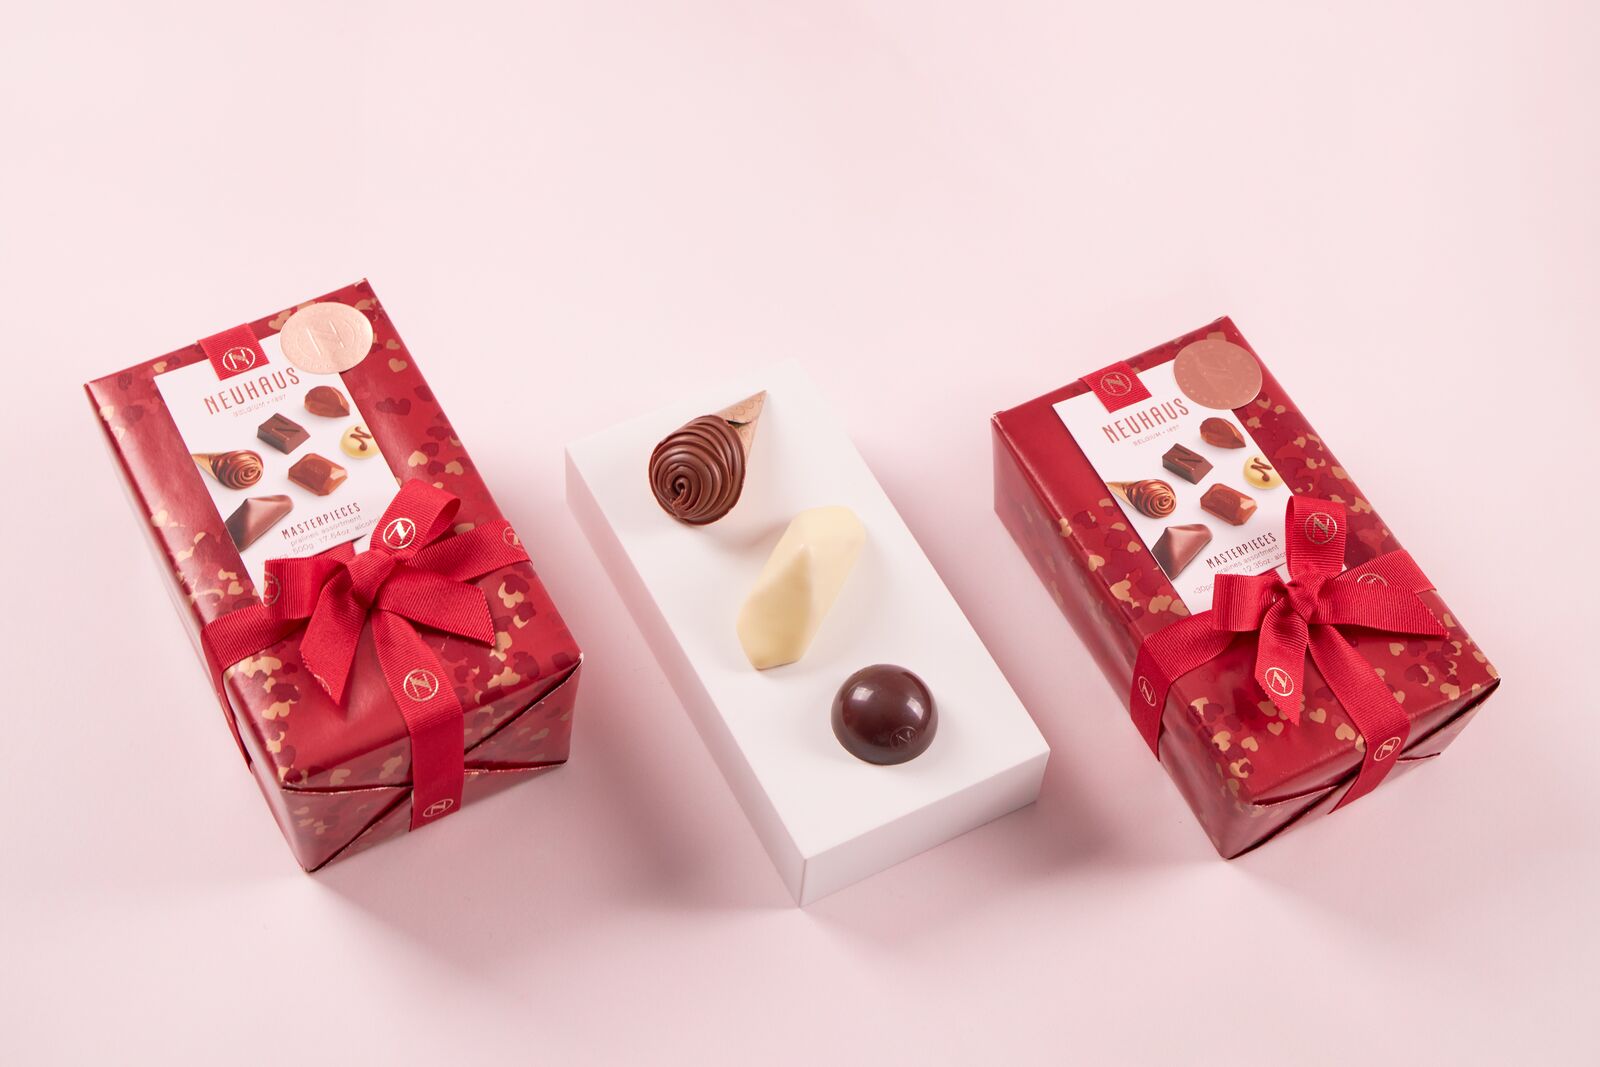 Neuhaus Belgian Chocolate Ballotin 1/4 lb Valentine Collection